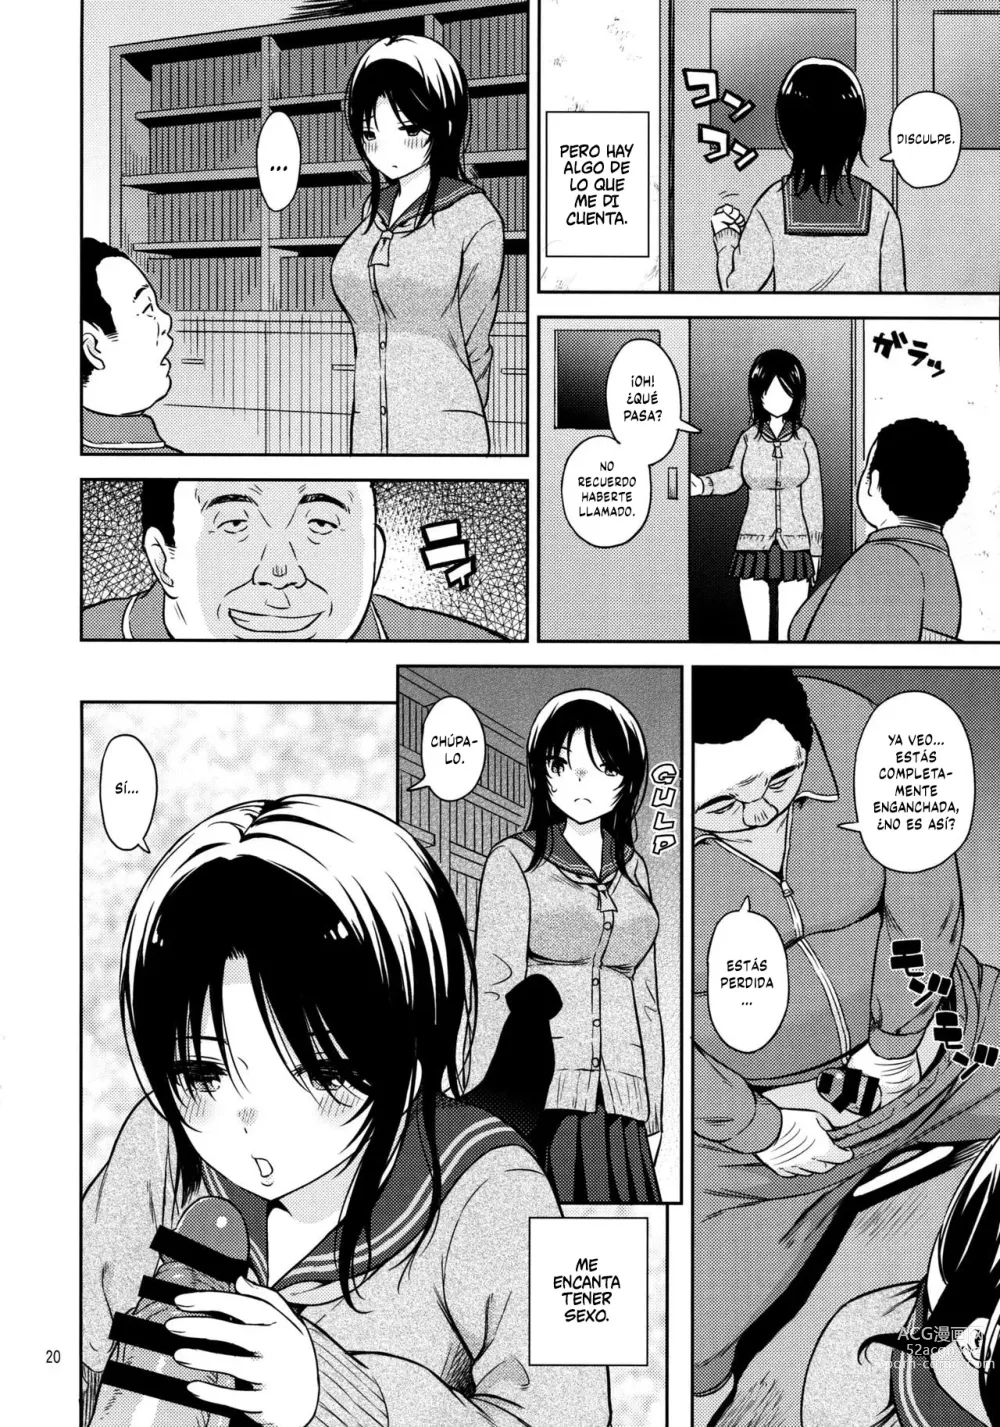 Page 23 of doujinshi Adlescence 06 Nozomi